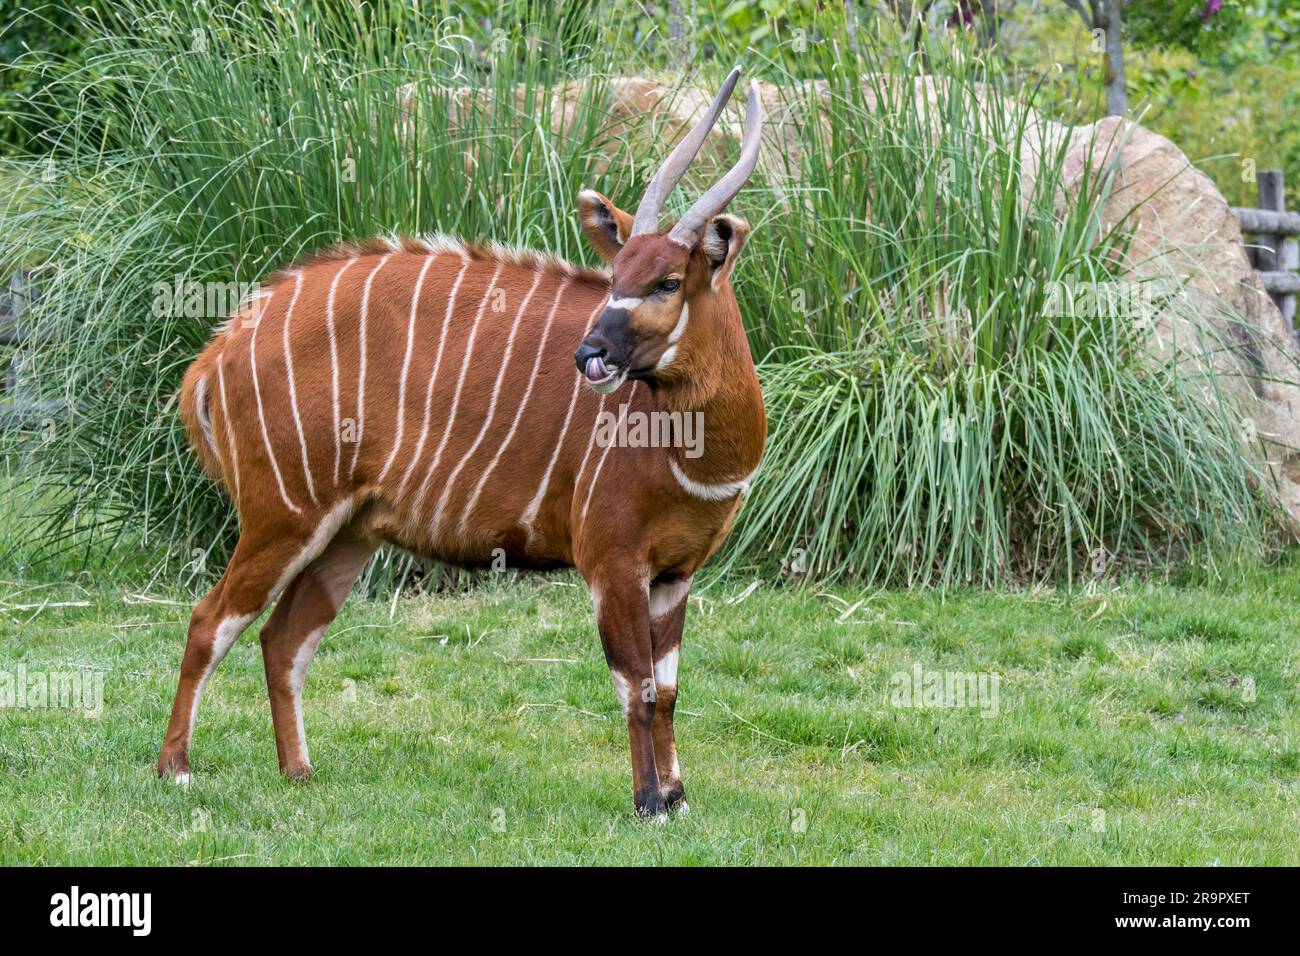 Bongo (Tragelaphus eurycerus) nello zoo, antilope notturna che abita nella foresta, originaria dell'Africa subsahariana Foto Stock